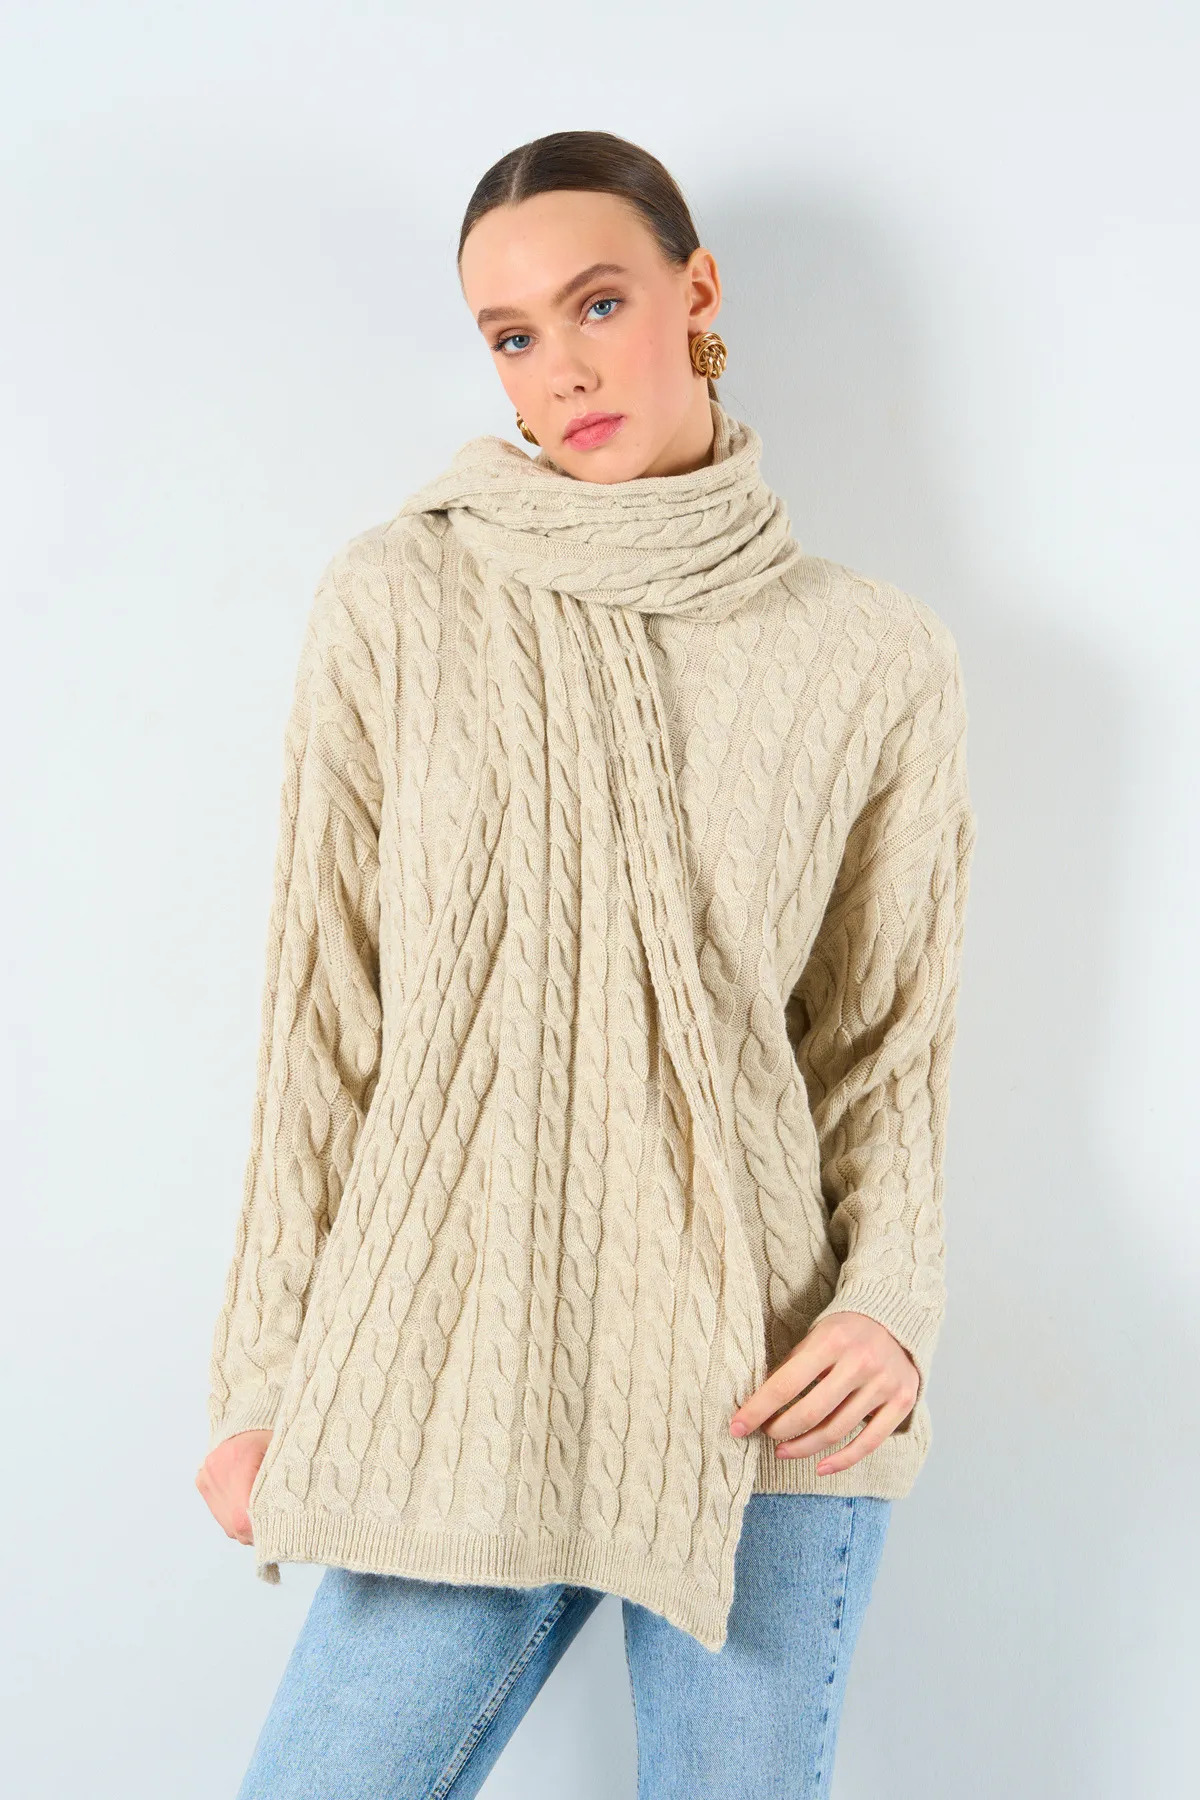 Laluvia Light Beige Hair Braided Shawl Knitwear Sweater